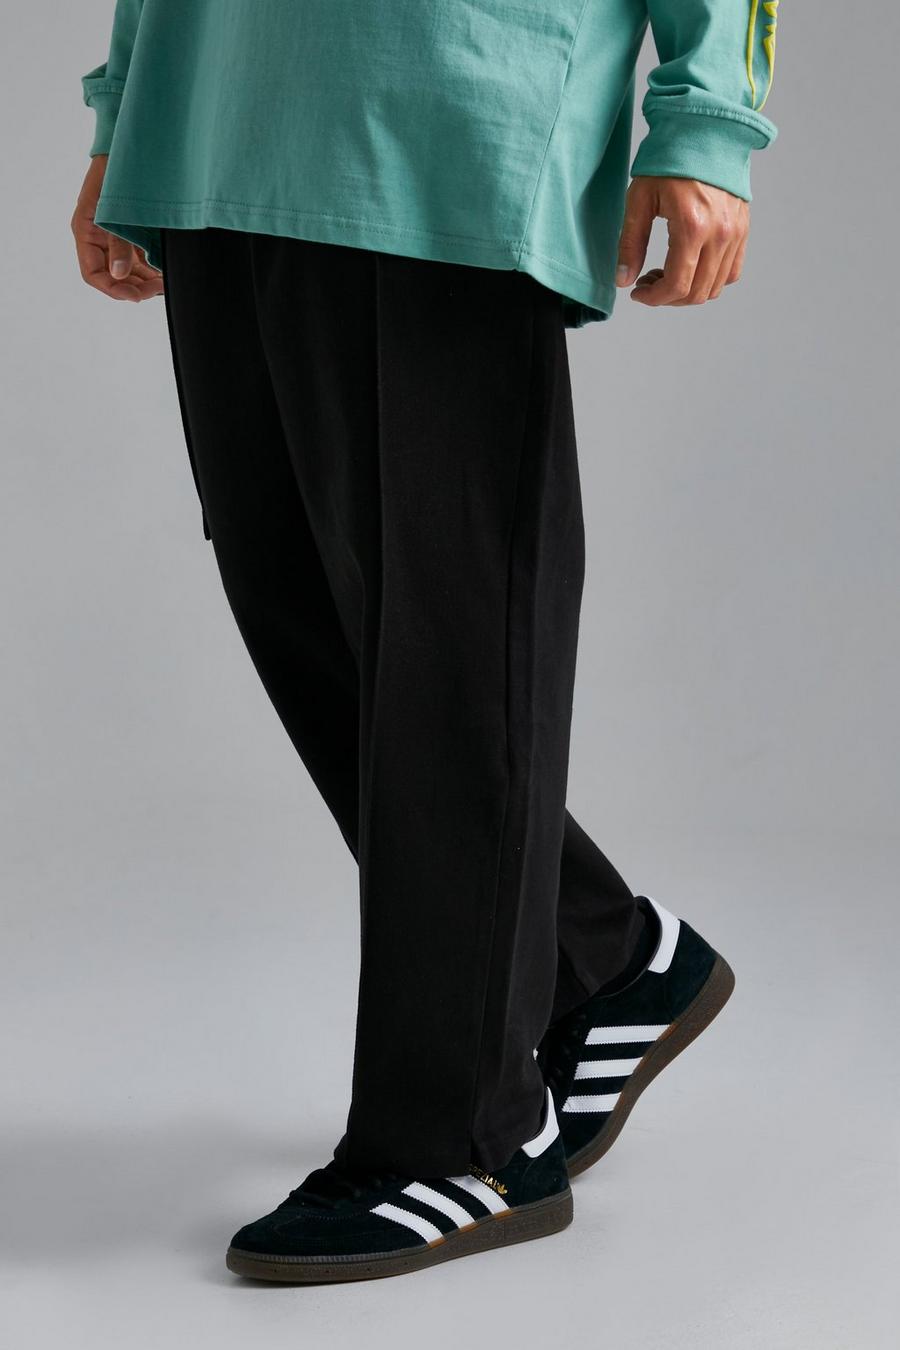 Pantalón chino elegante ancho con 1 bolsillo, Black nero